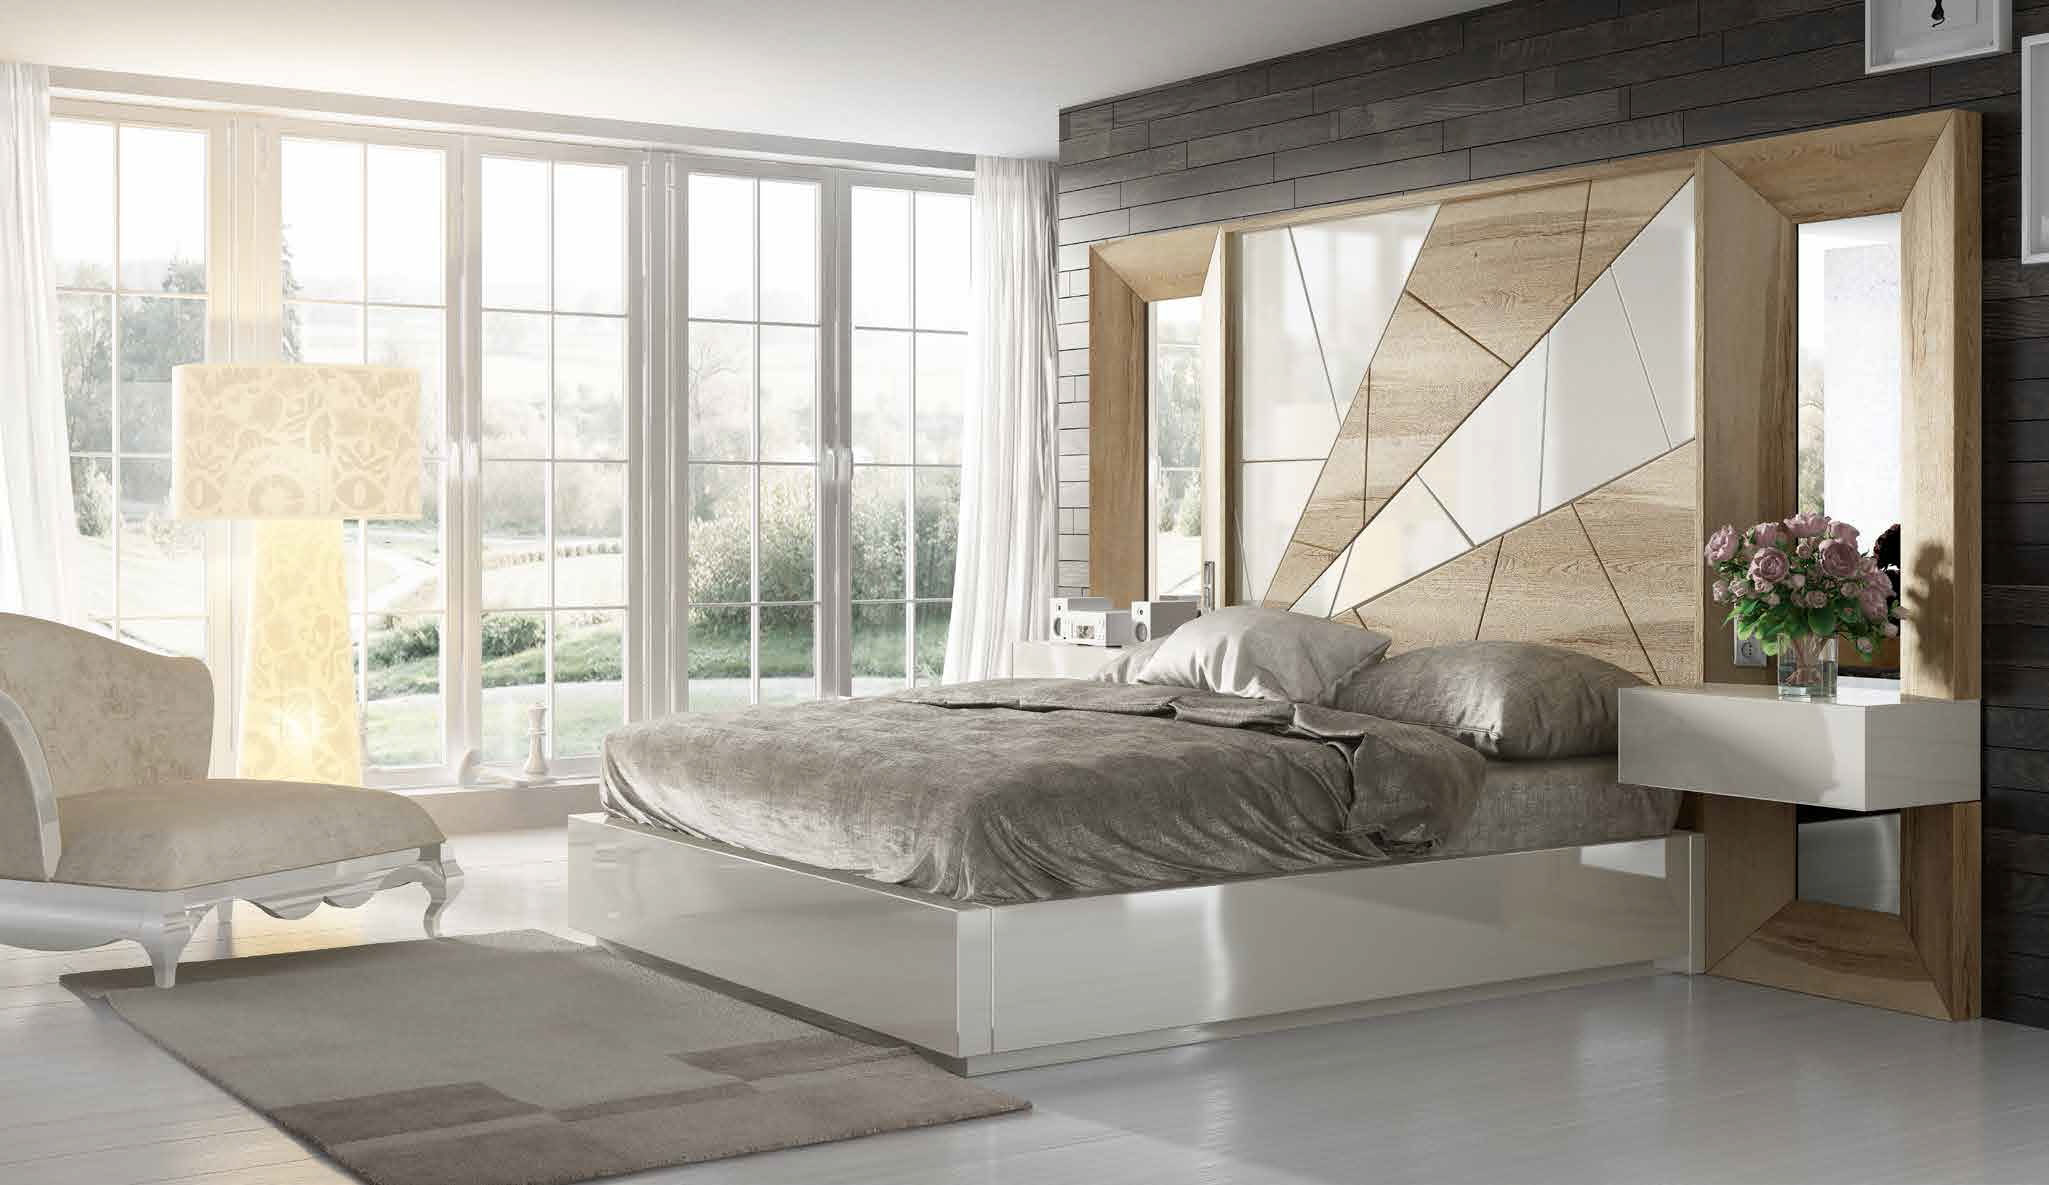 Brands Franco Furniture Bedrooms vol2, Spain DOR 32